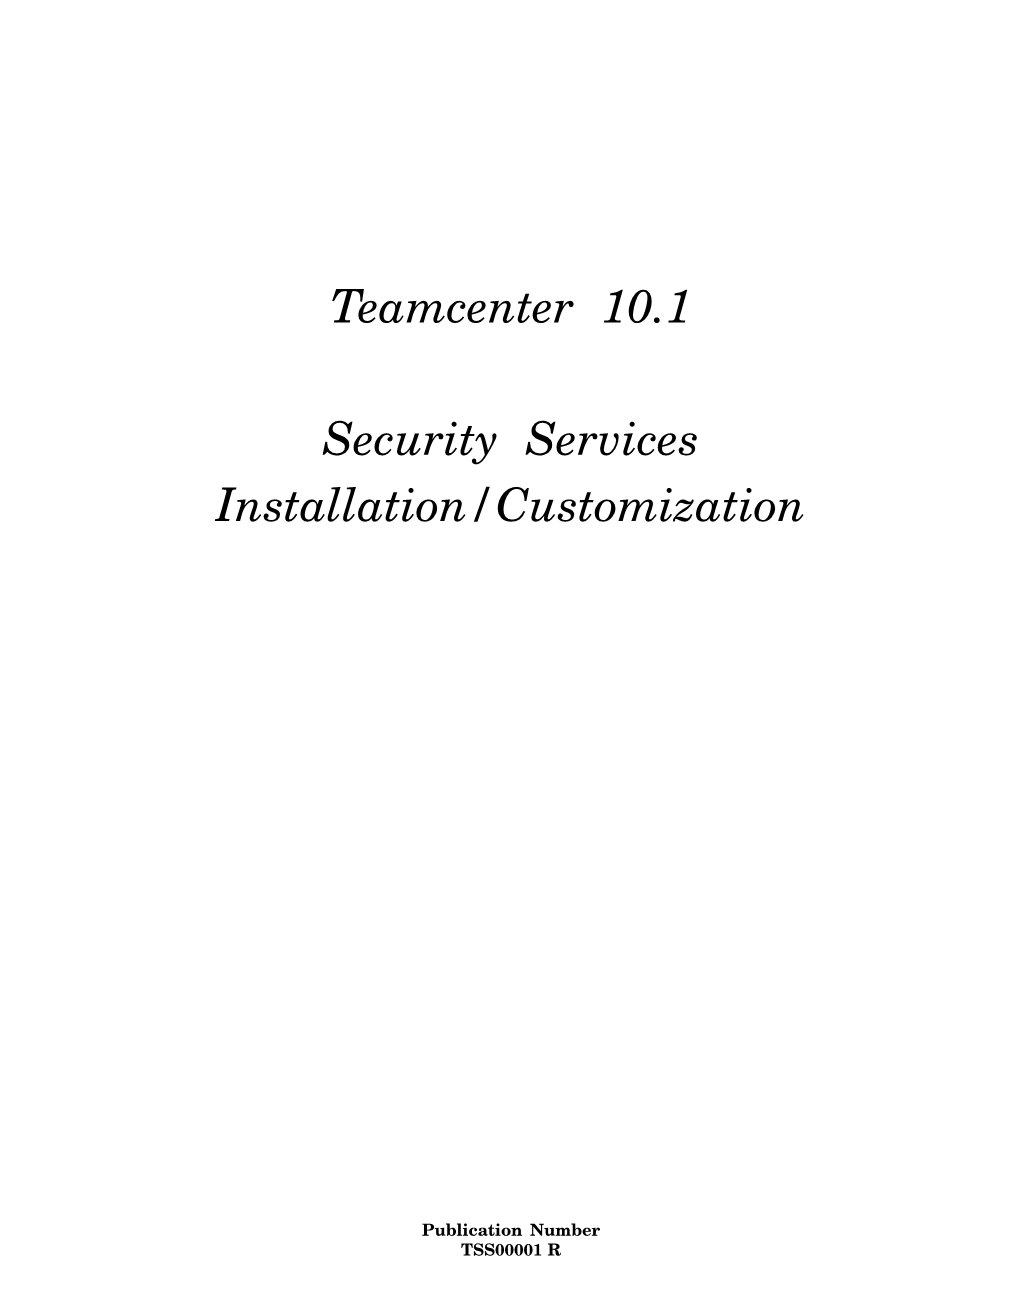 Teamcenter 10.1 Security Services Installation/Customization